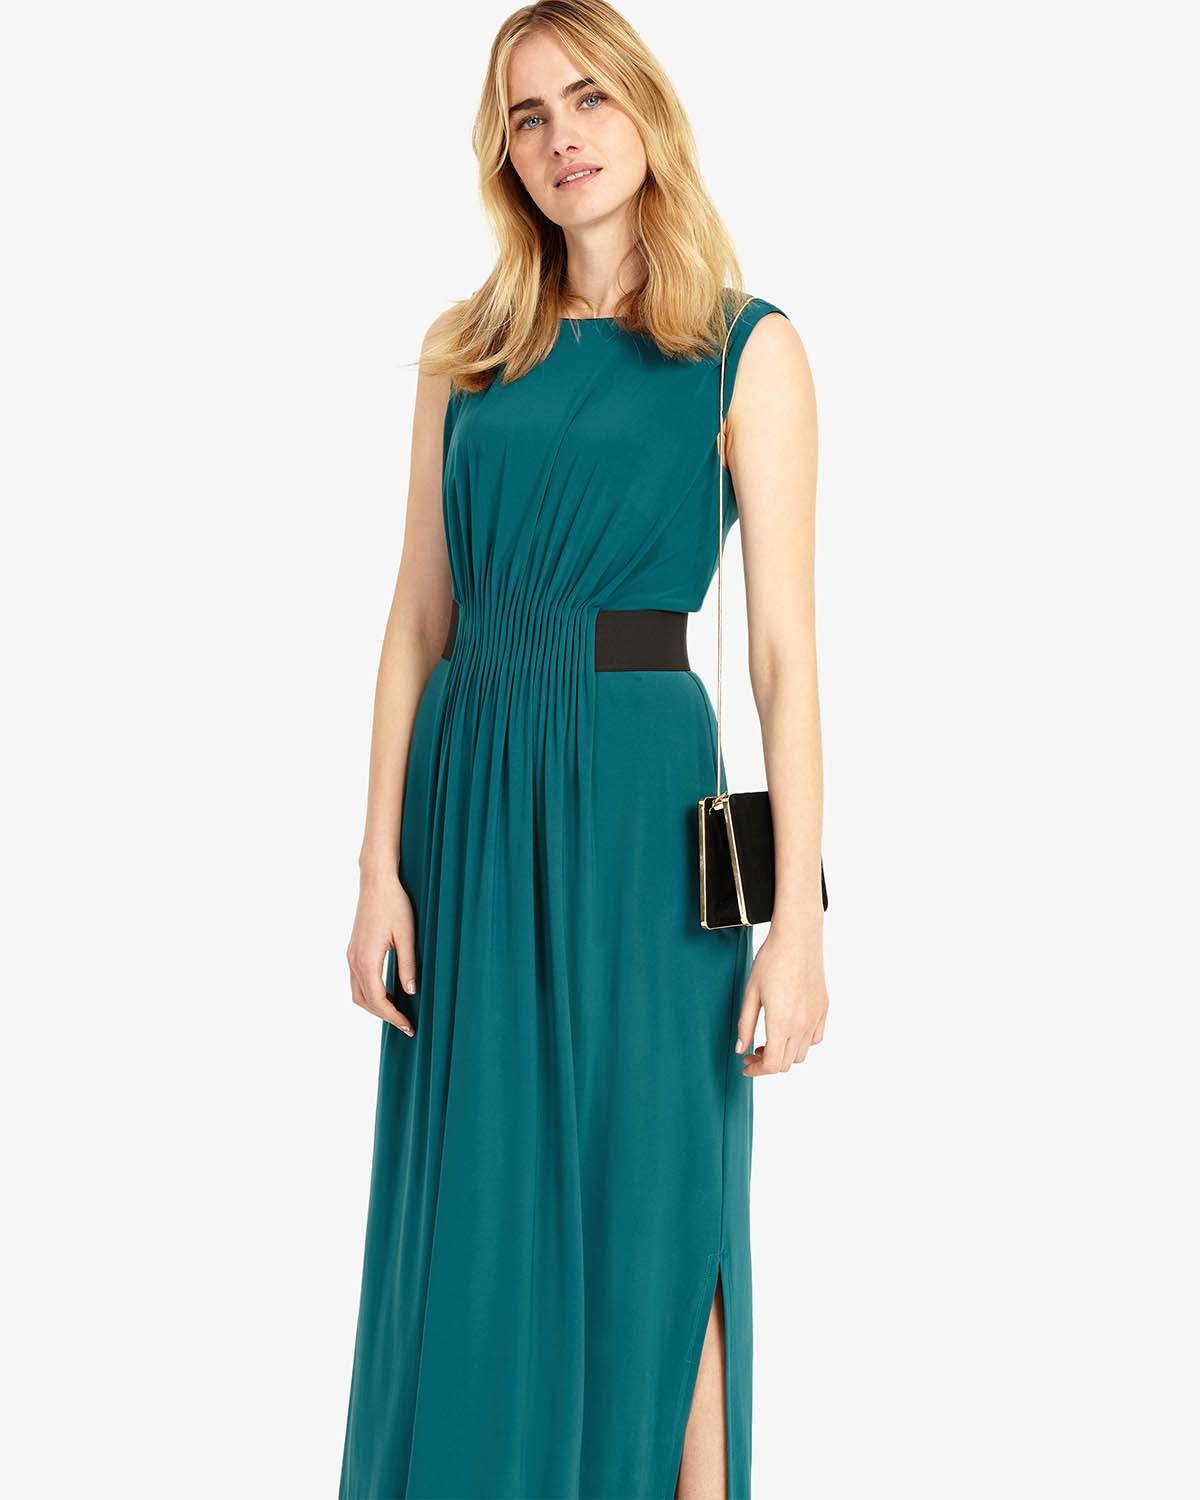 Phase Eight Jade Dresses Petra Full Length Dress